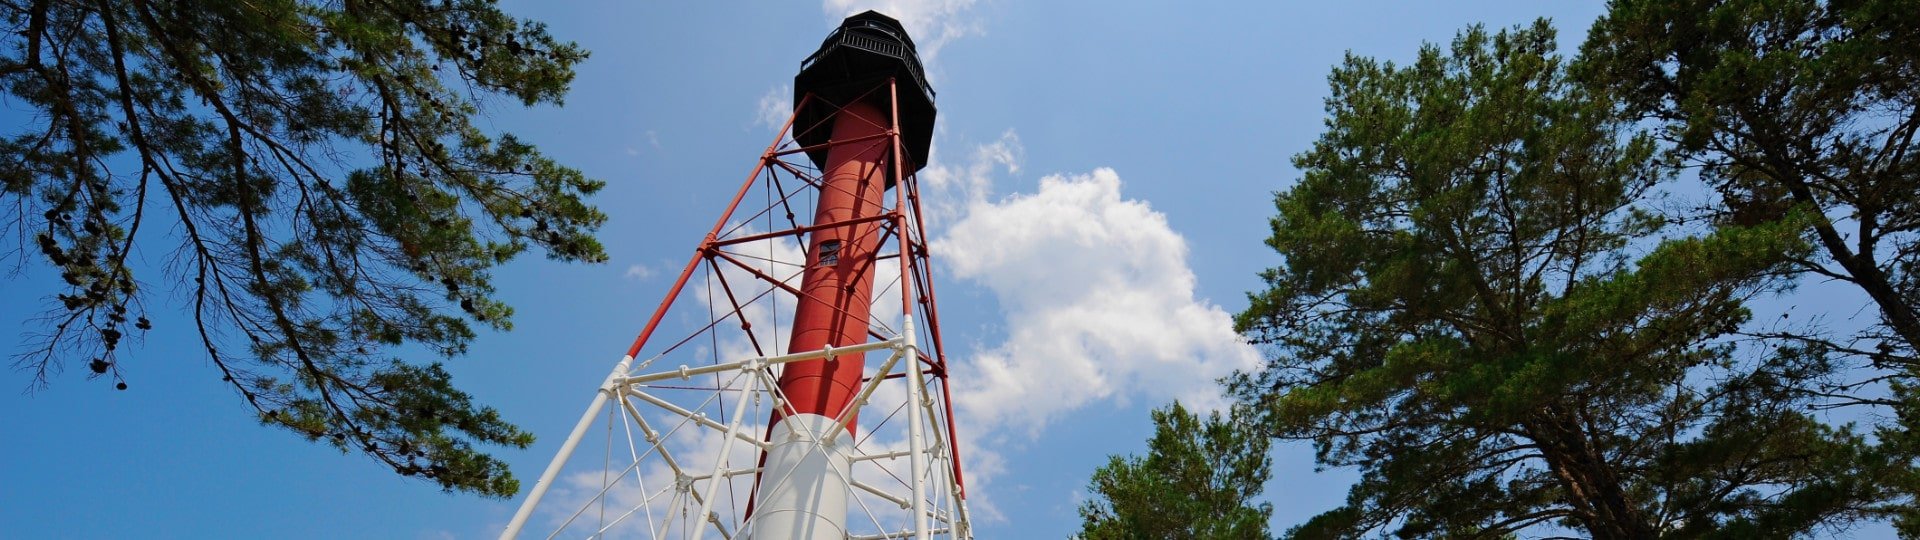 Carrabelle Florida's Lighthouse